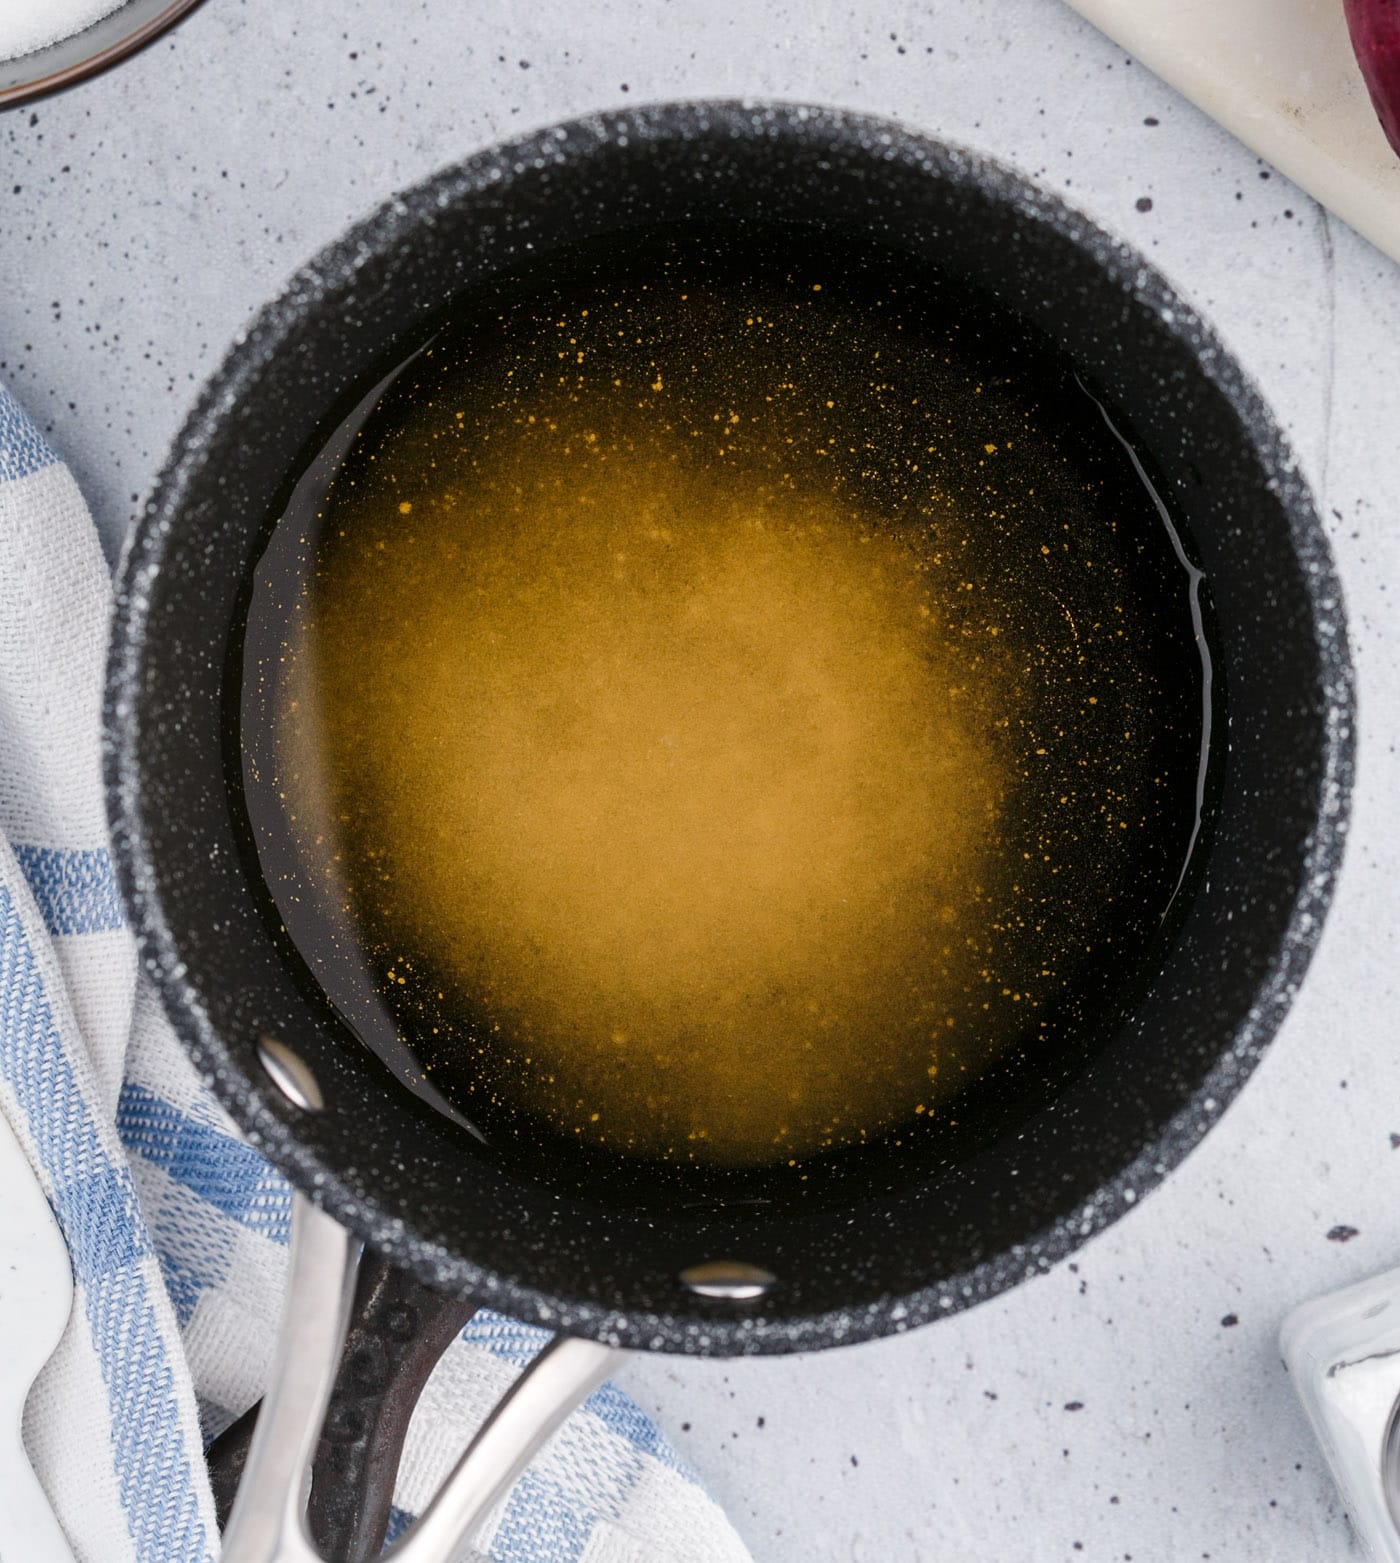 Vinegar mixture in a saucepan